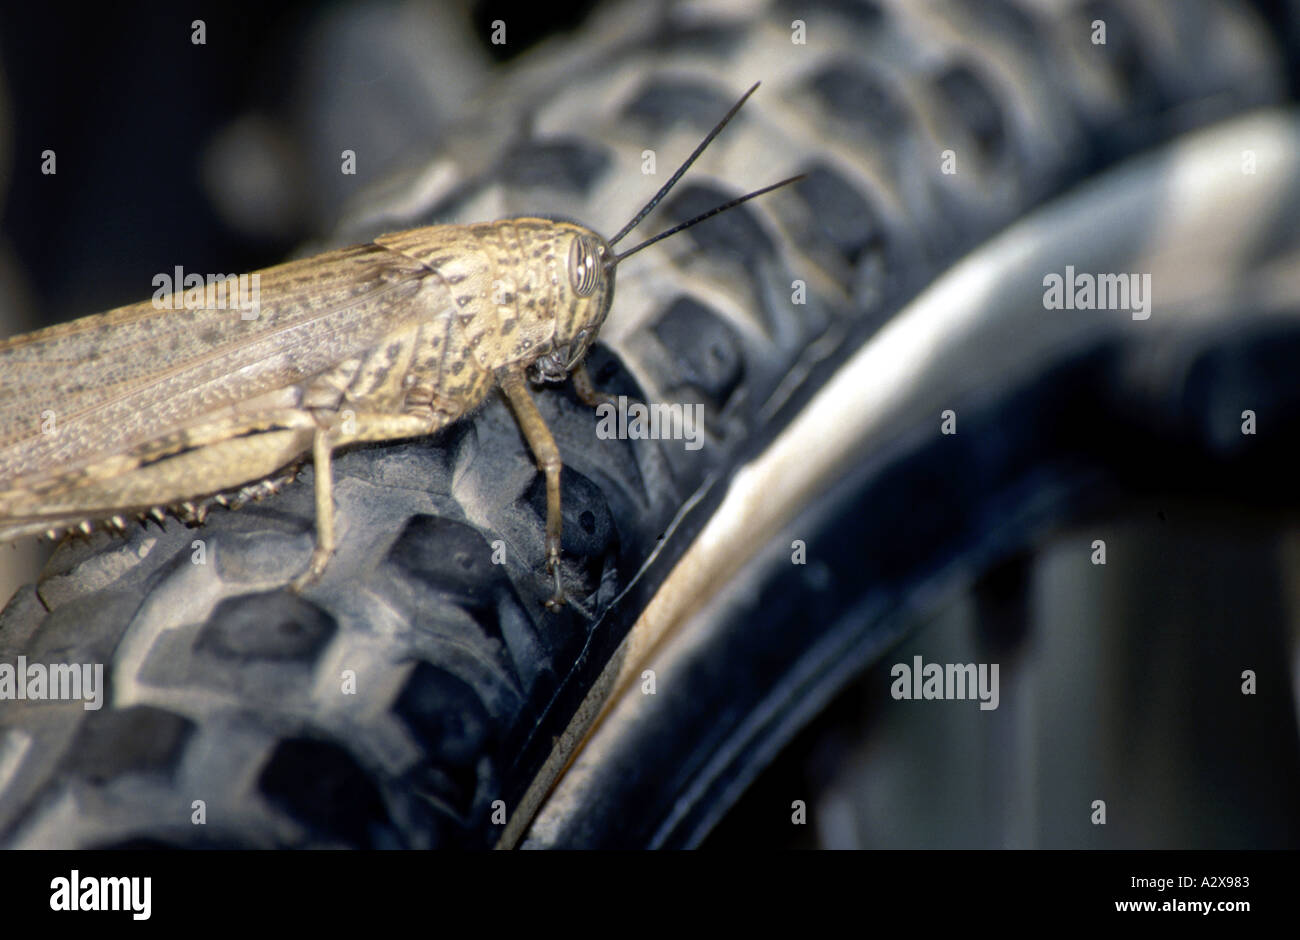 Grasshopper posed on the wheel of a mountain bike Stock Photo